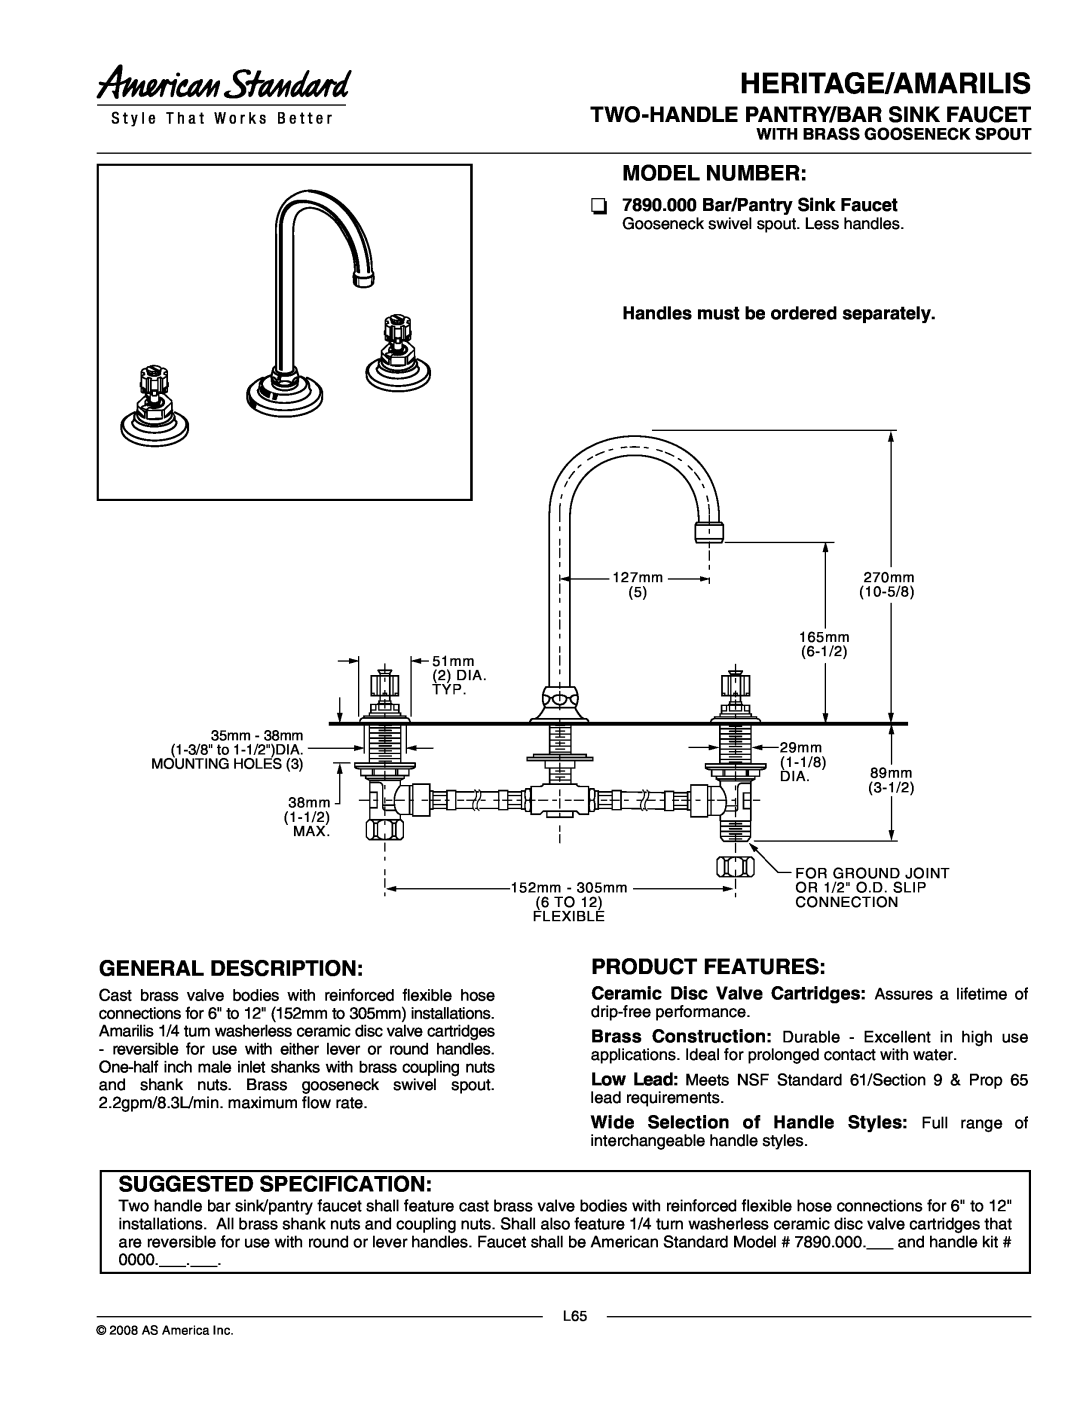 American Standard manual Heritage/Amarilis, 7890.000 Bar/Pantry Sink Faucet, Handles must be ordered separately 